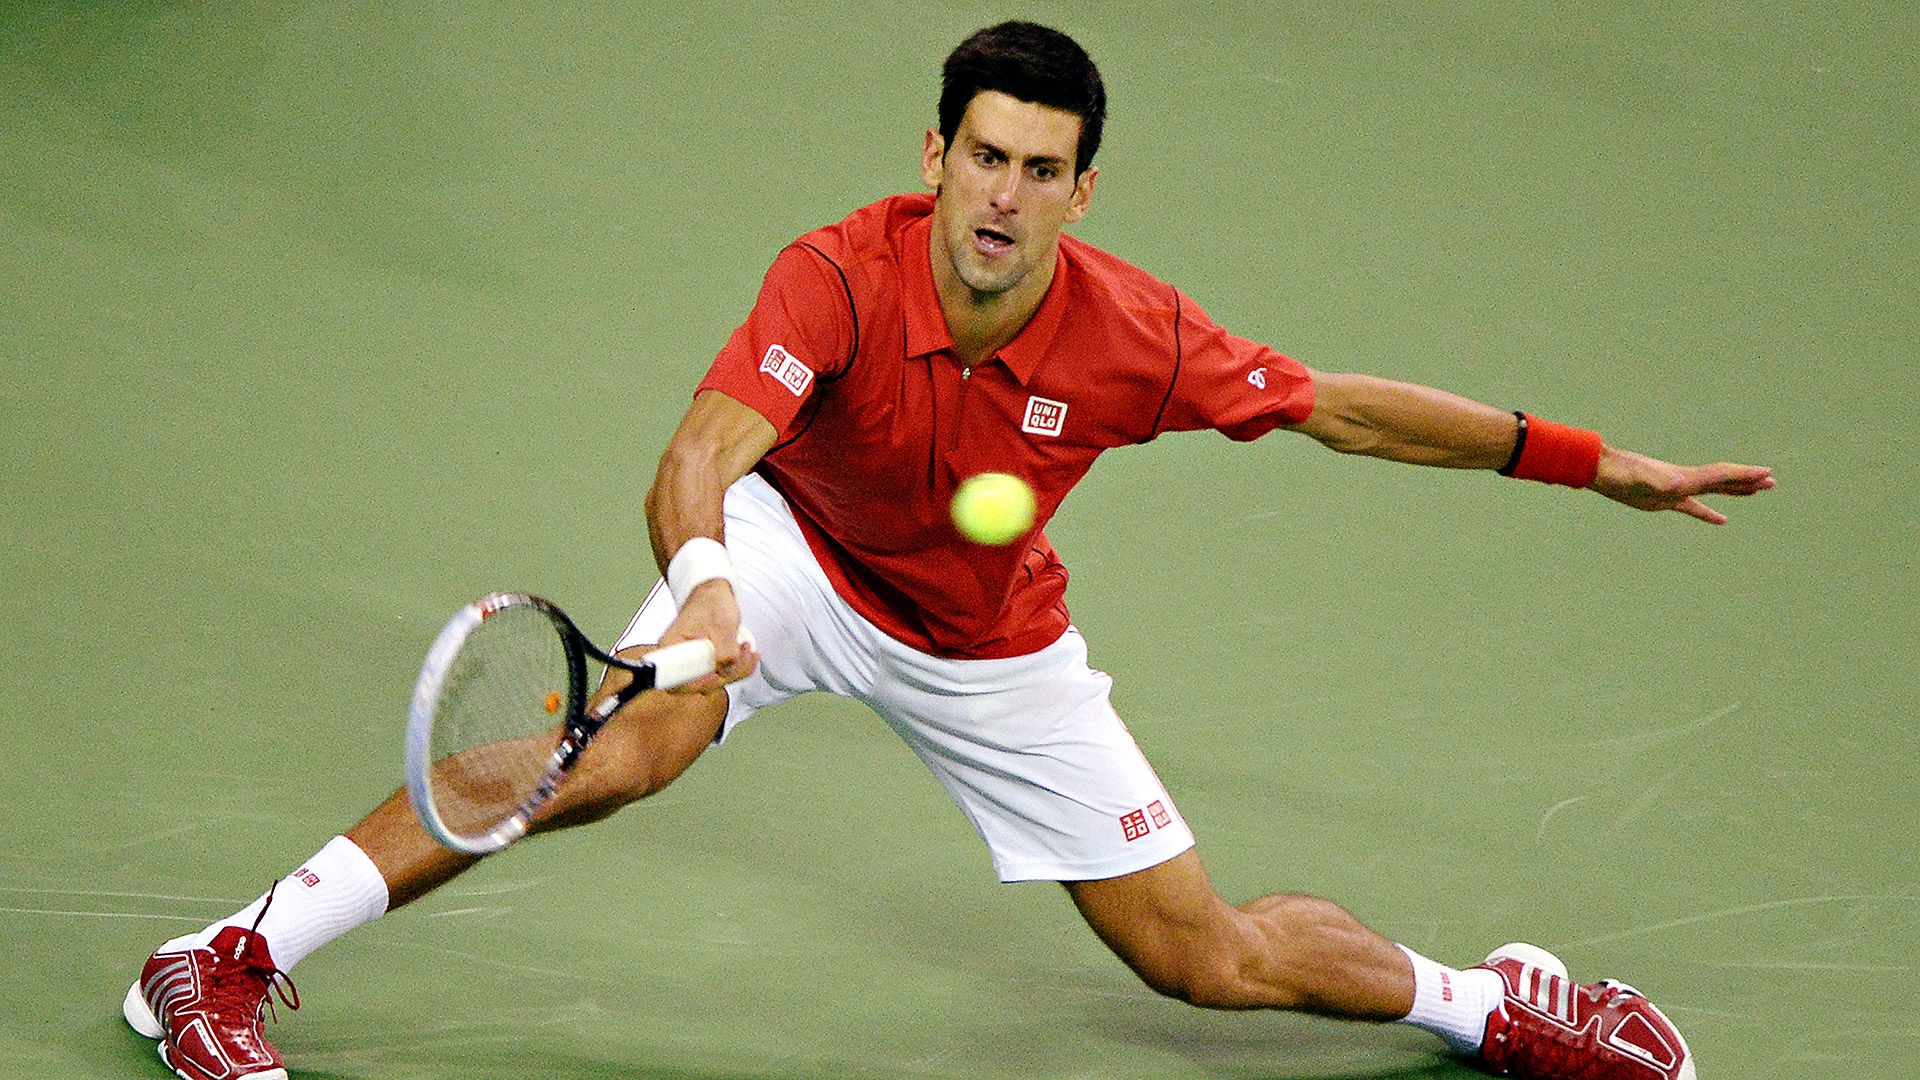 Tennis - Novak Djokovic rules the Asian swing1920 x 1080